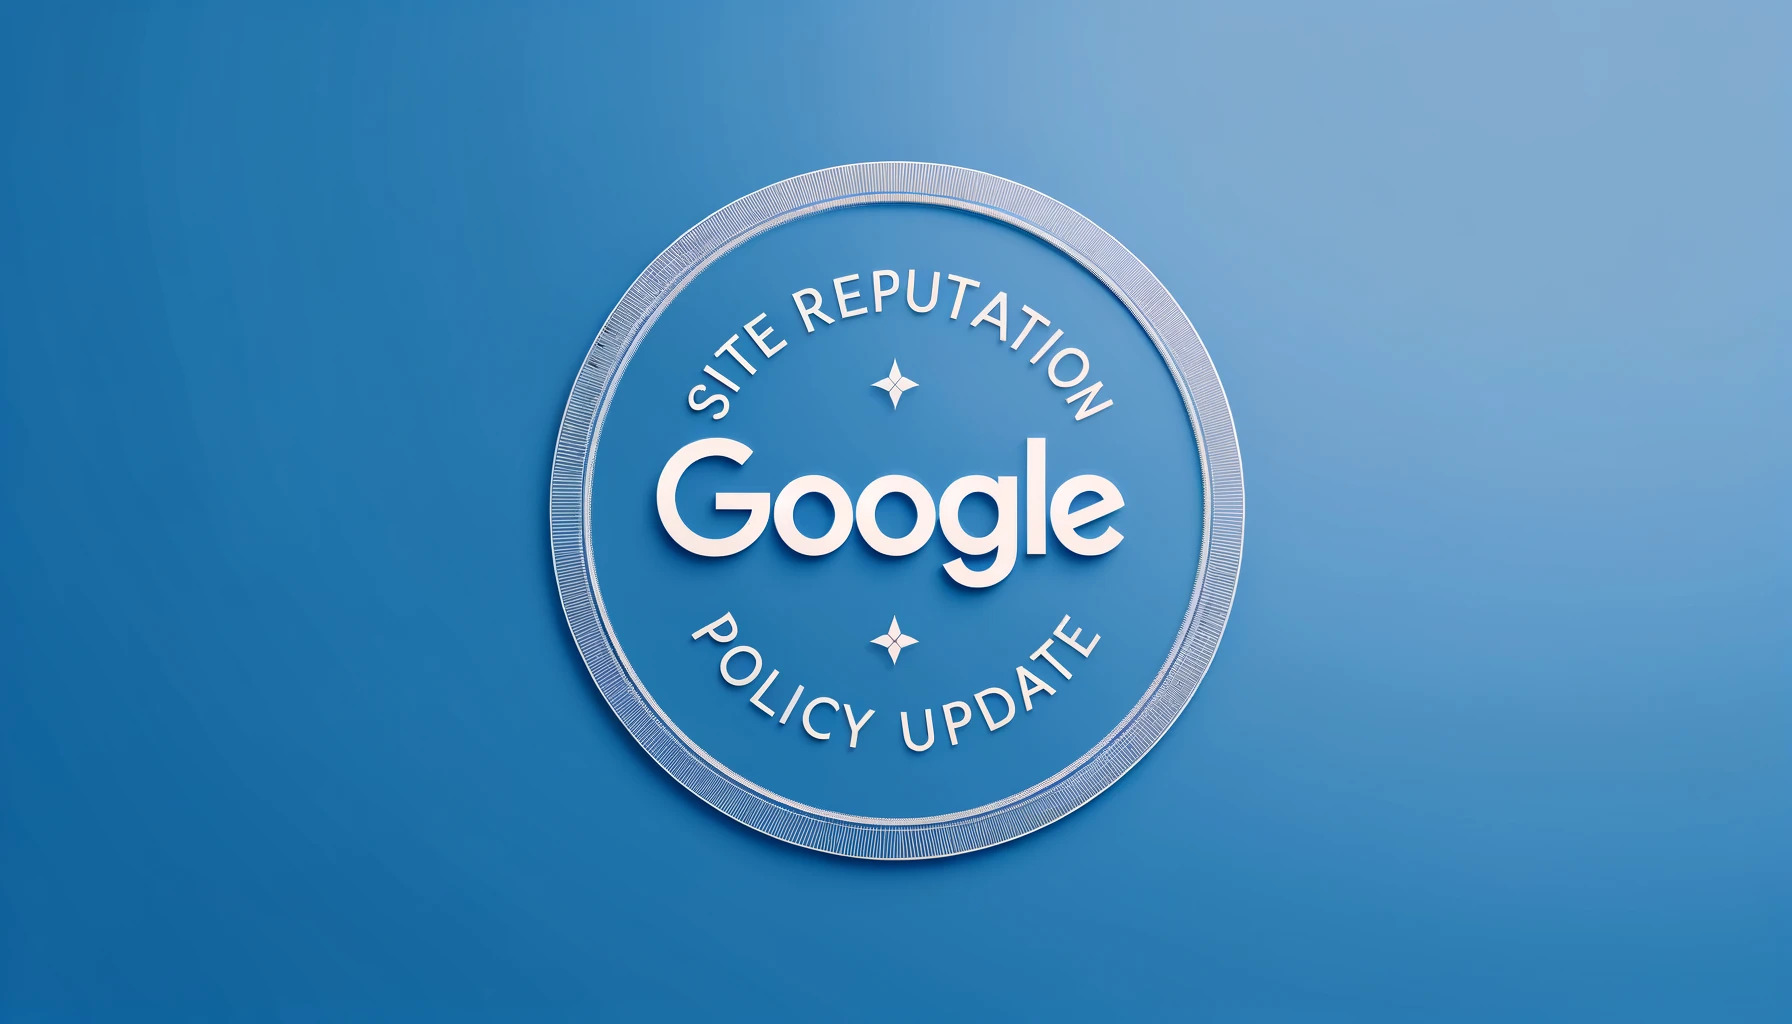 google-site-reputation-policy